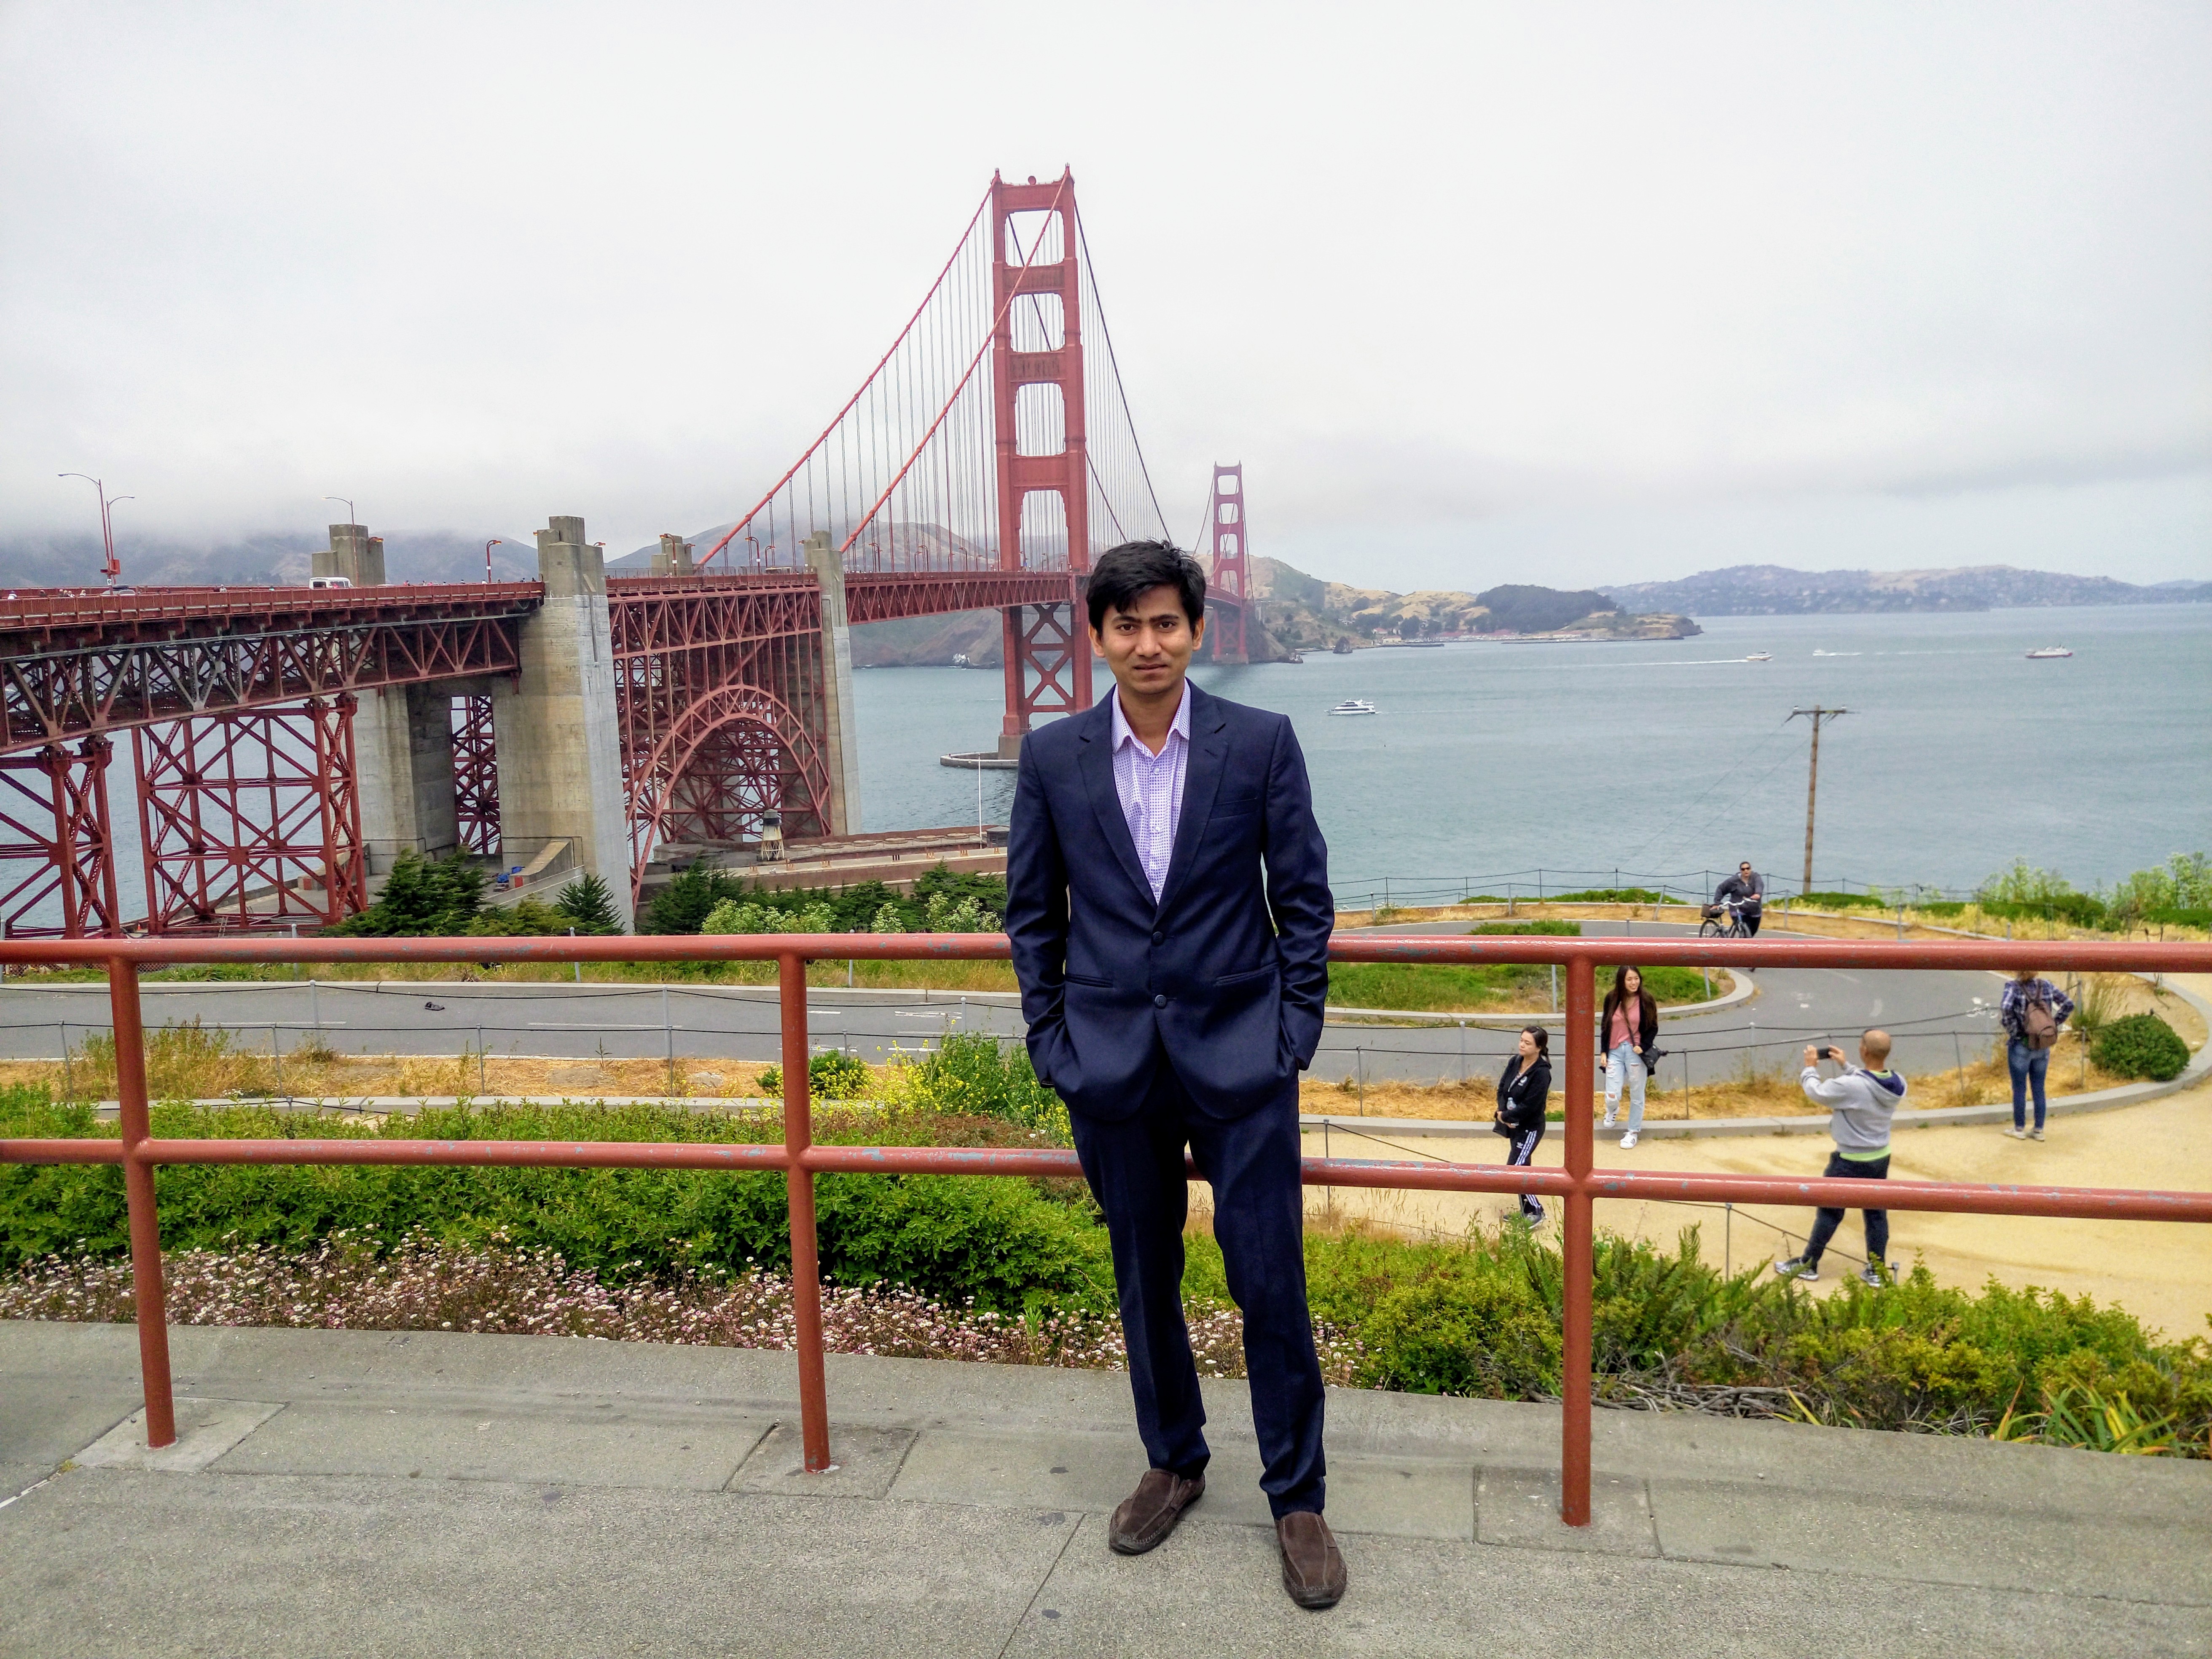 Monsur Hossain in a dark suit near the Golden Gate Bridge